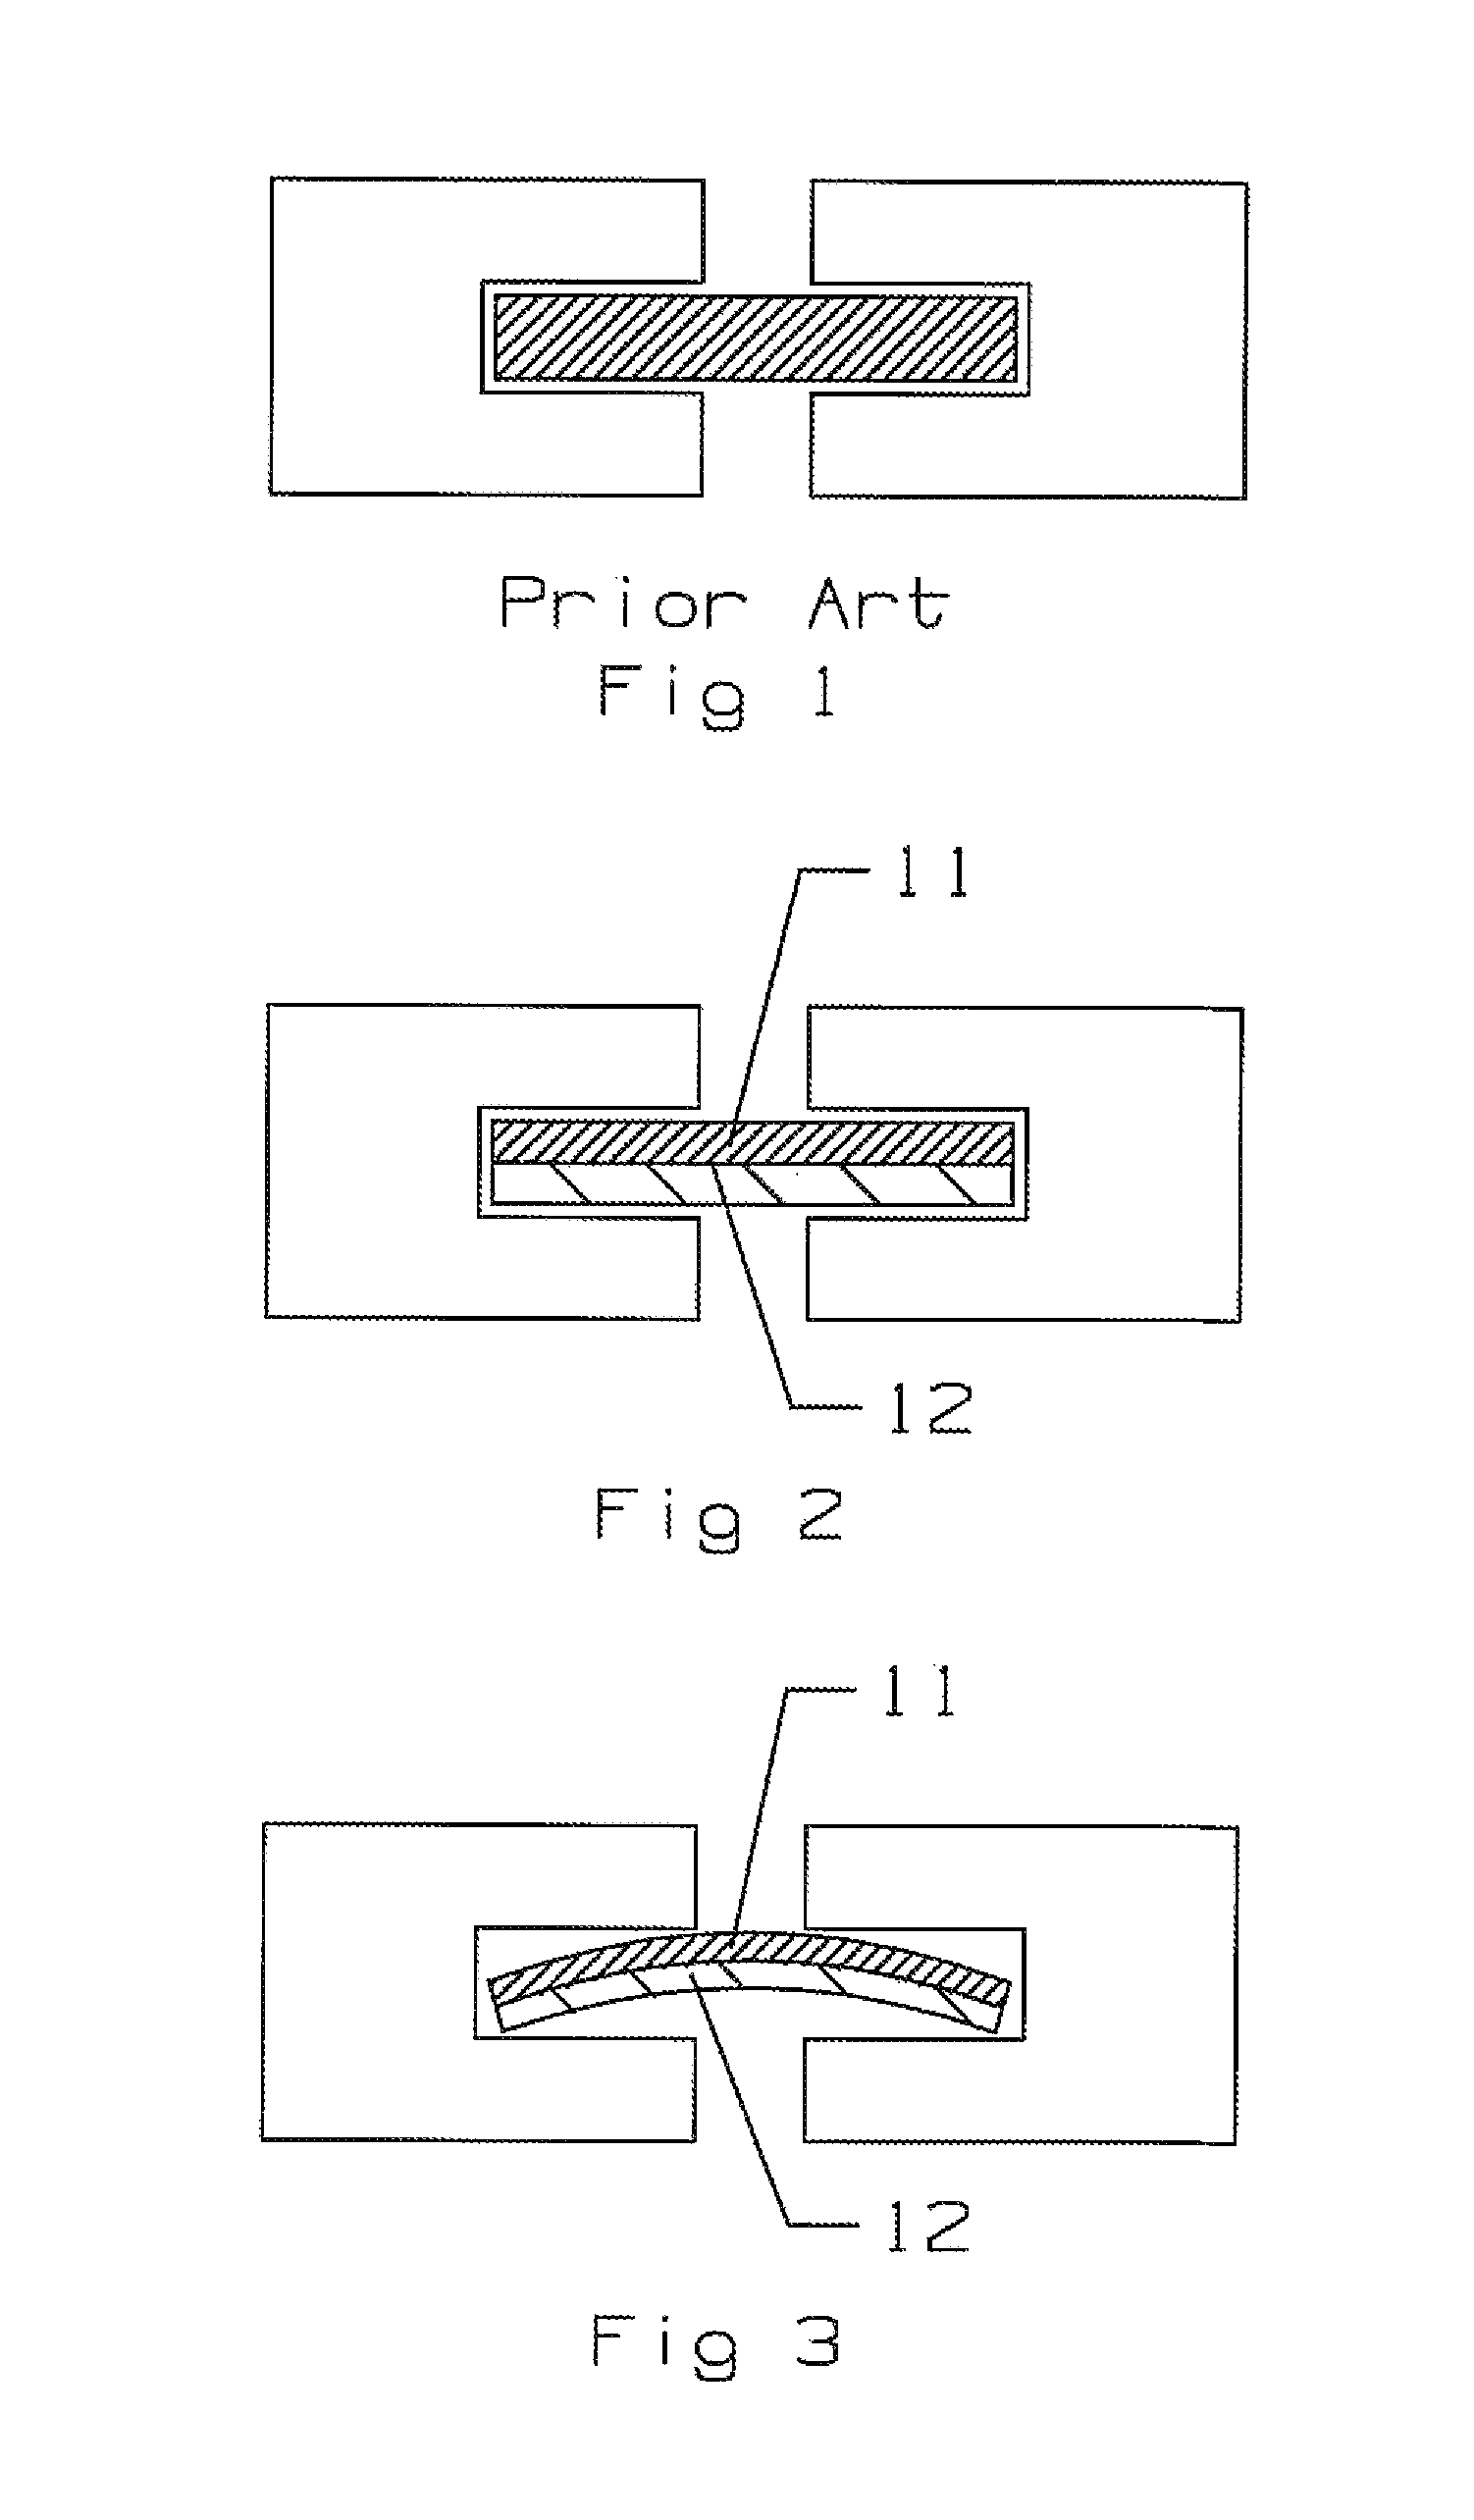 Bi-metallic strip seal for a turbine shroud